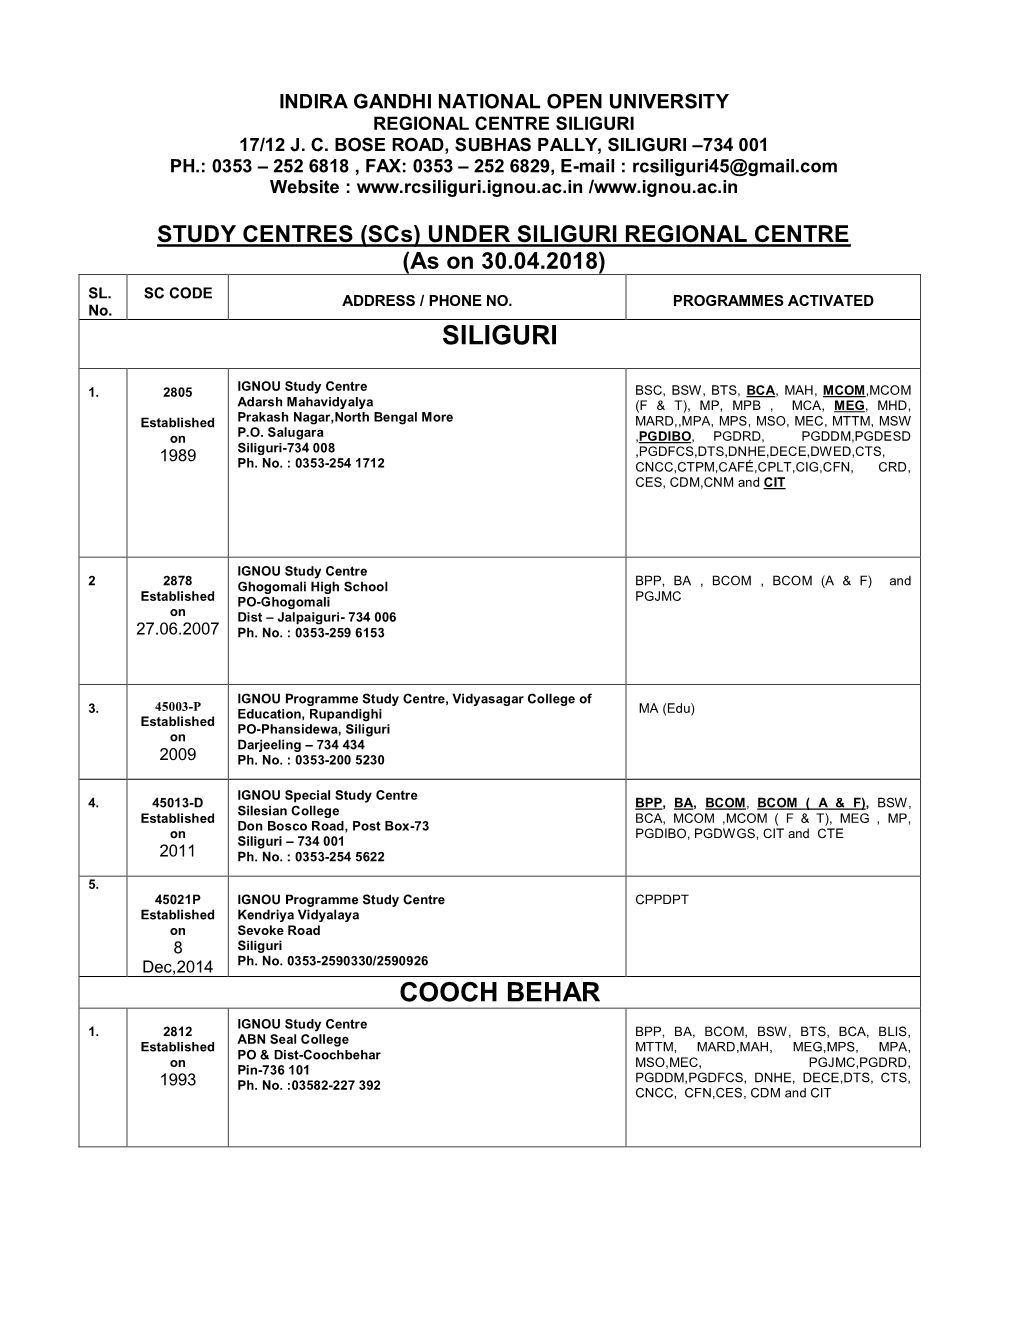 Profile of Ignou Study Centres Under Siligurisub